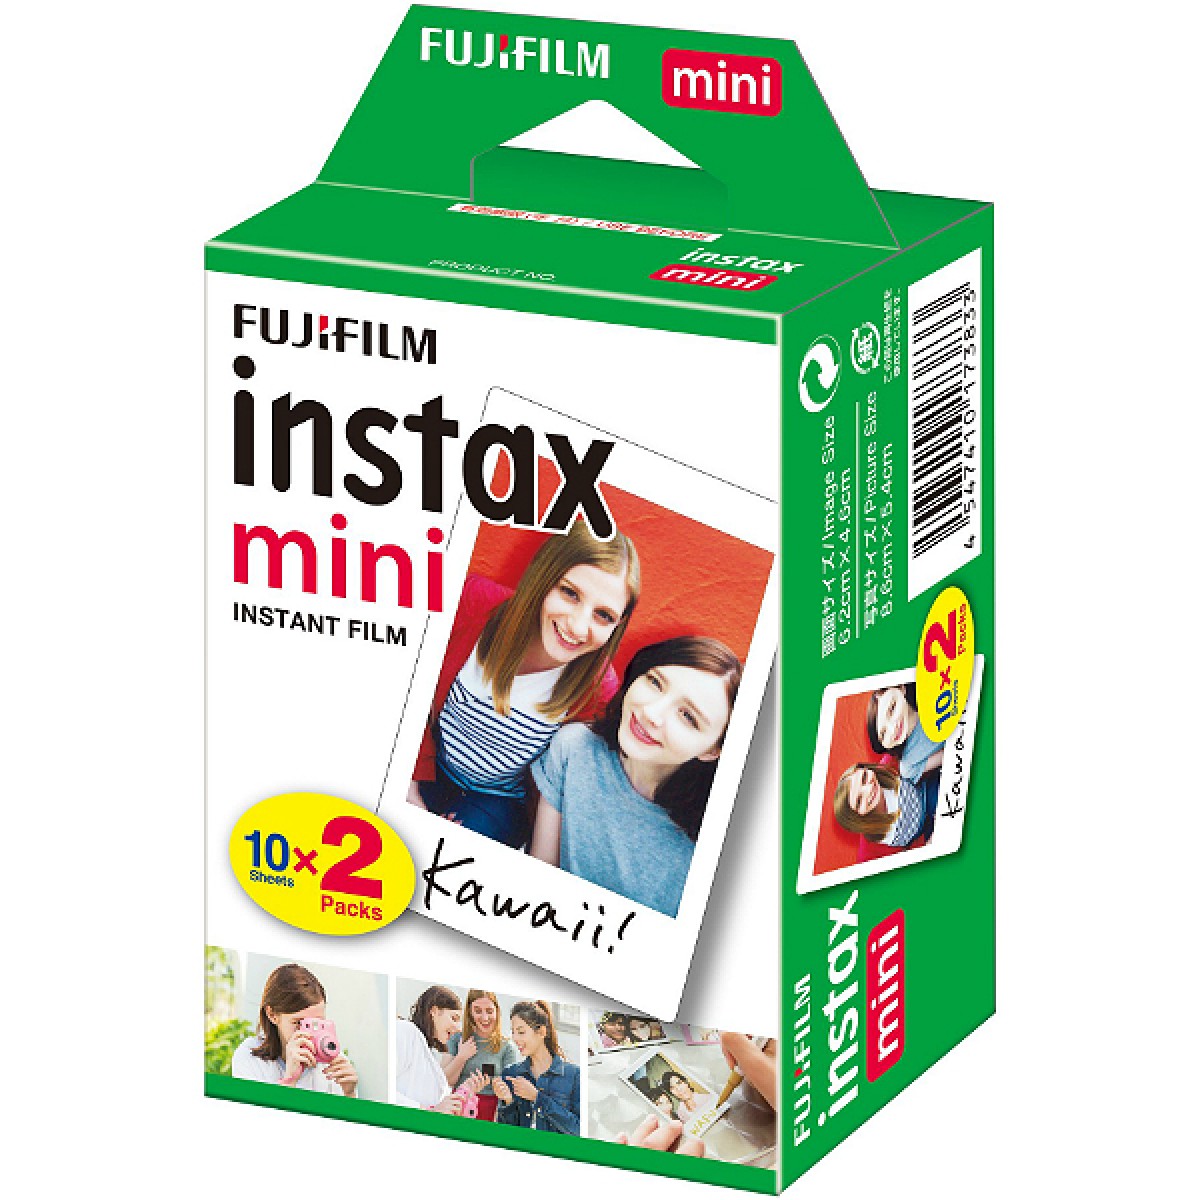 (20) FujiFilm Instax mini instant Film 10pcs. x 2 packs White